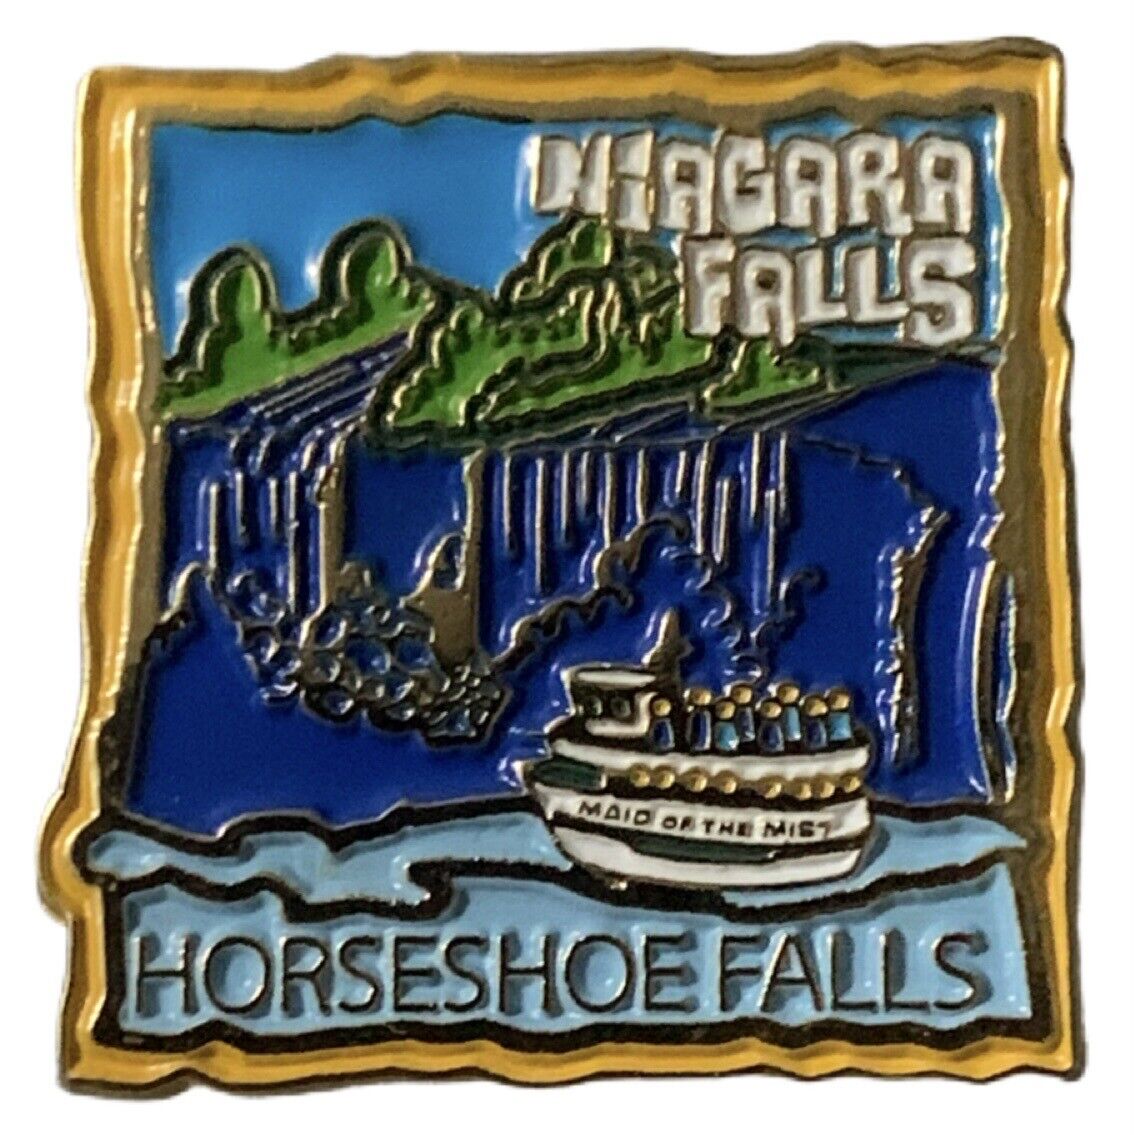 Vintage Niagara Falls Horseshoe Falls Maid of the Mist Travel Souvenir Pin